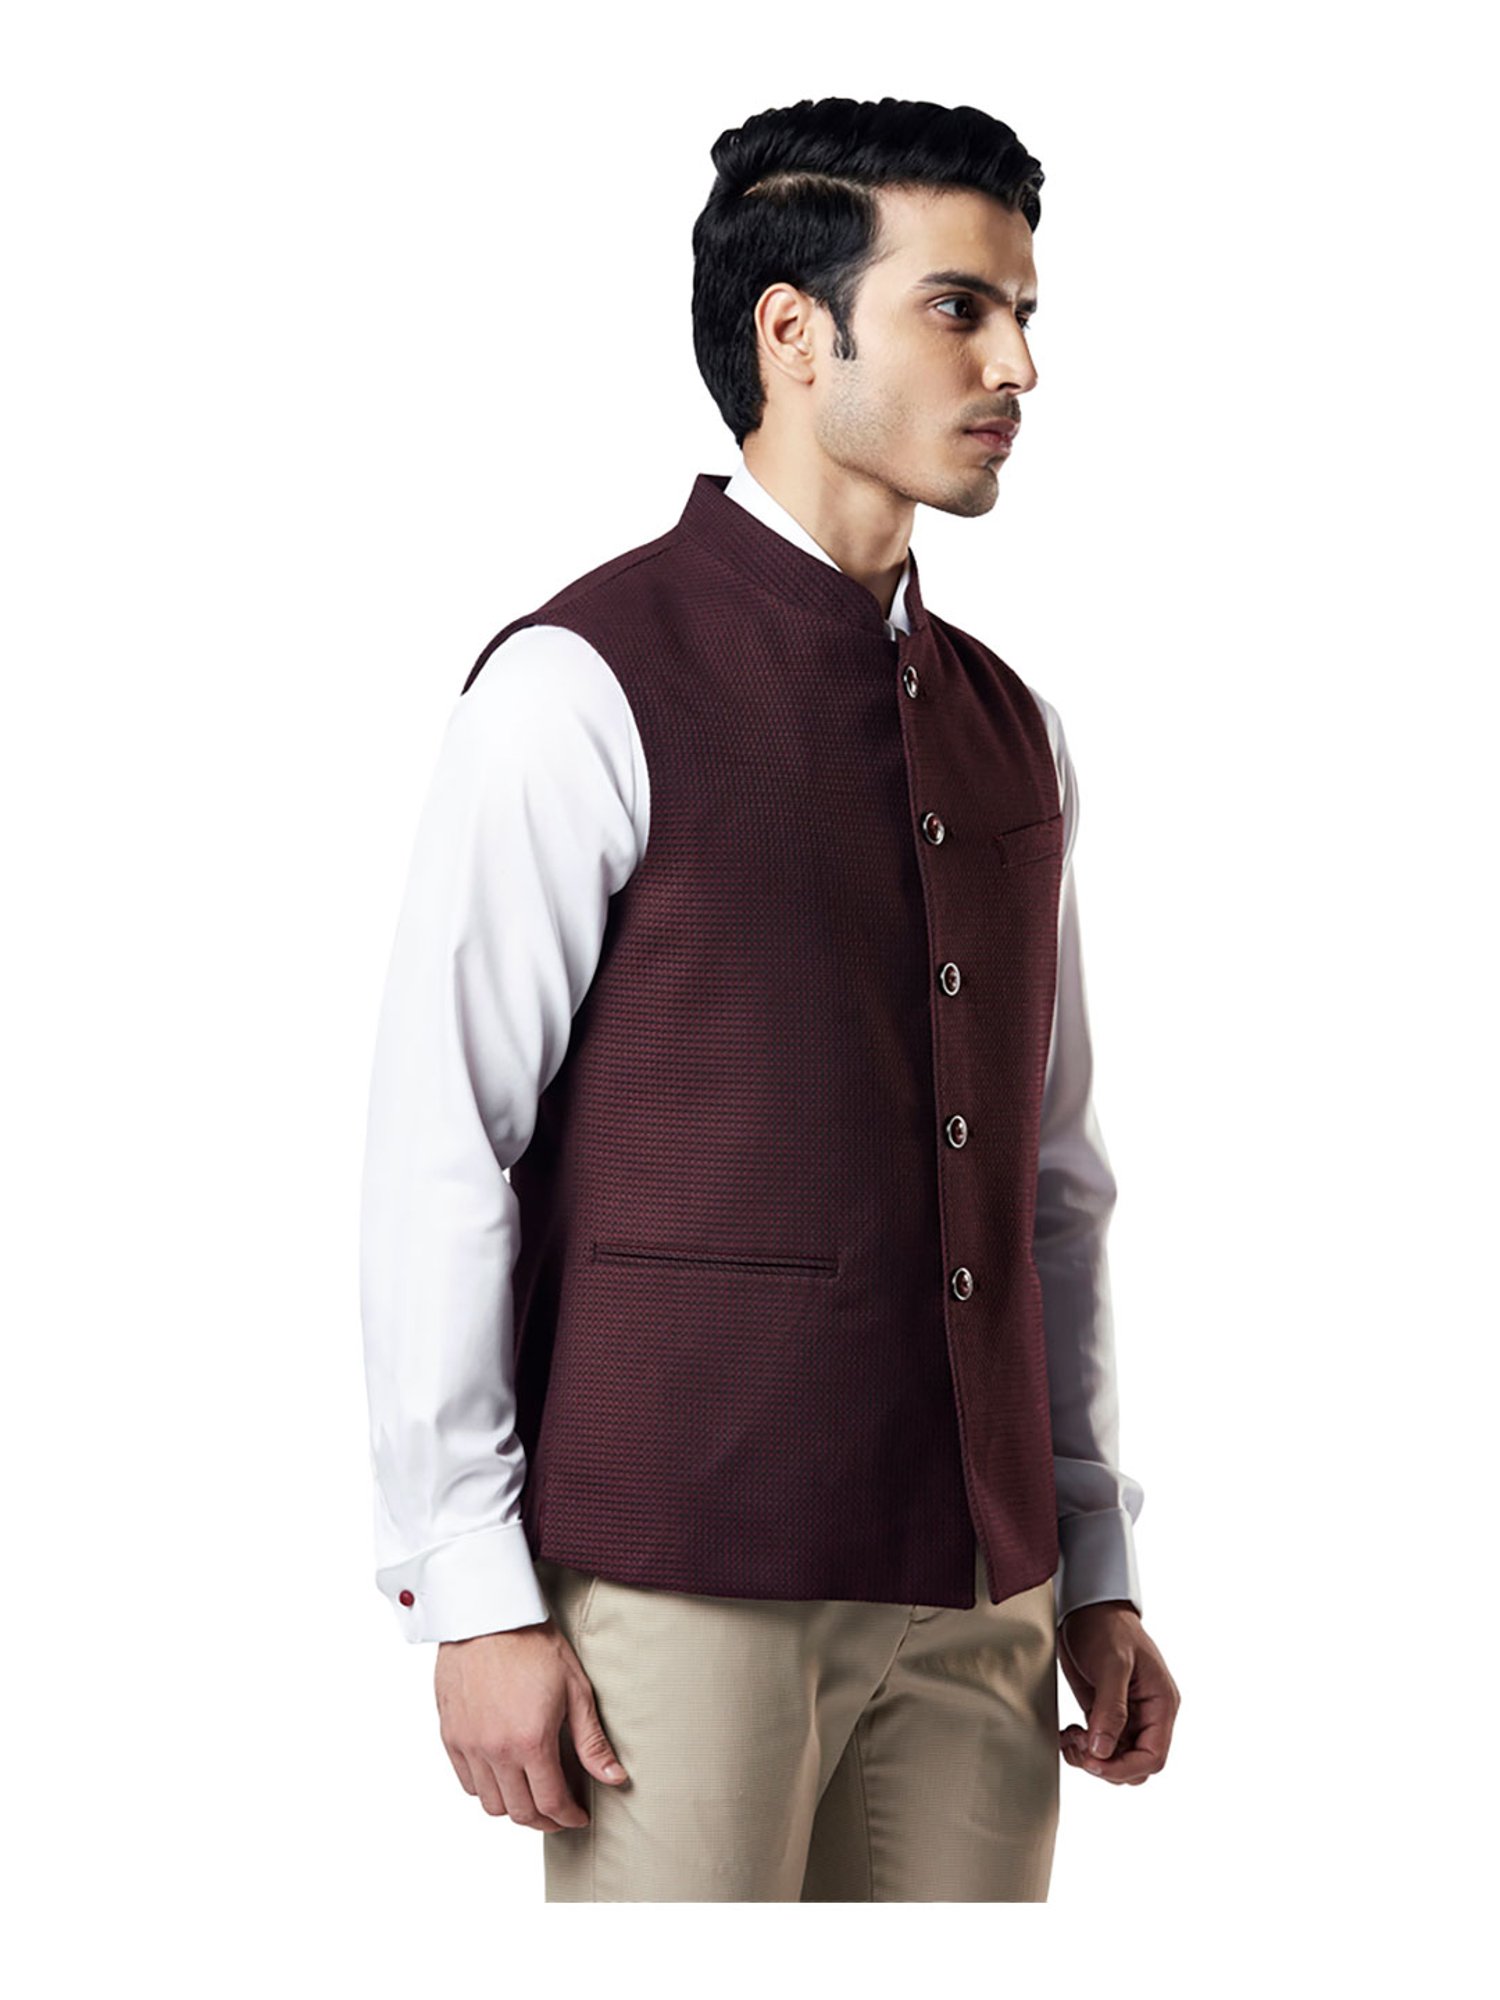 Buy Vastraa Fusion Men's Blended Bandhgala Festive Nehru Jacket/Waistcoat/Vest  - Maroon - Size-36 at Amazon.in